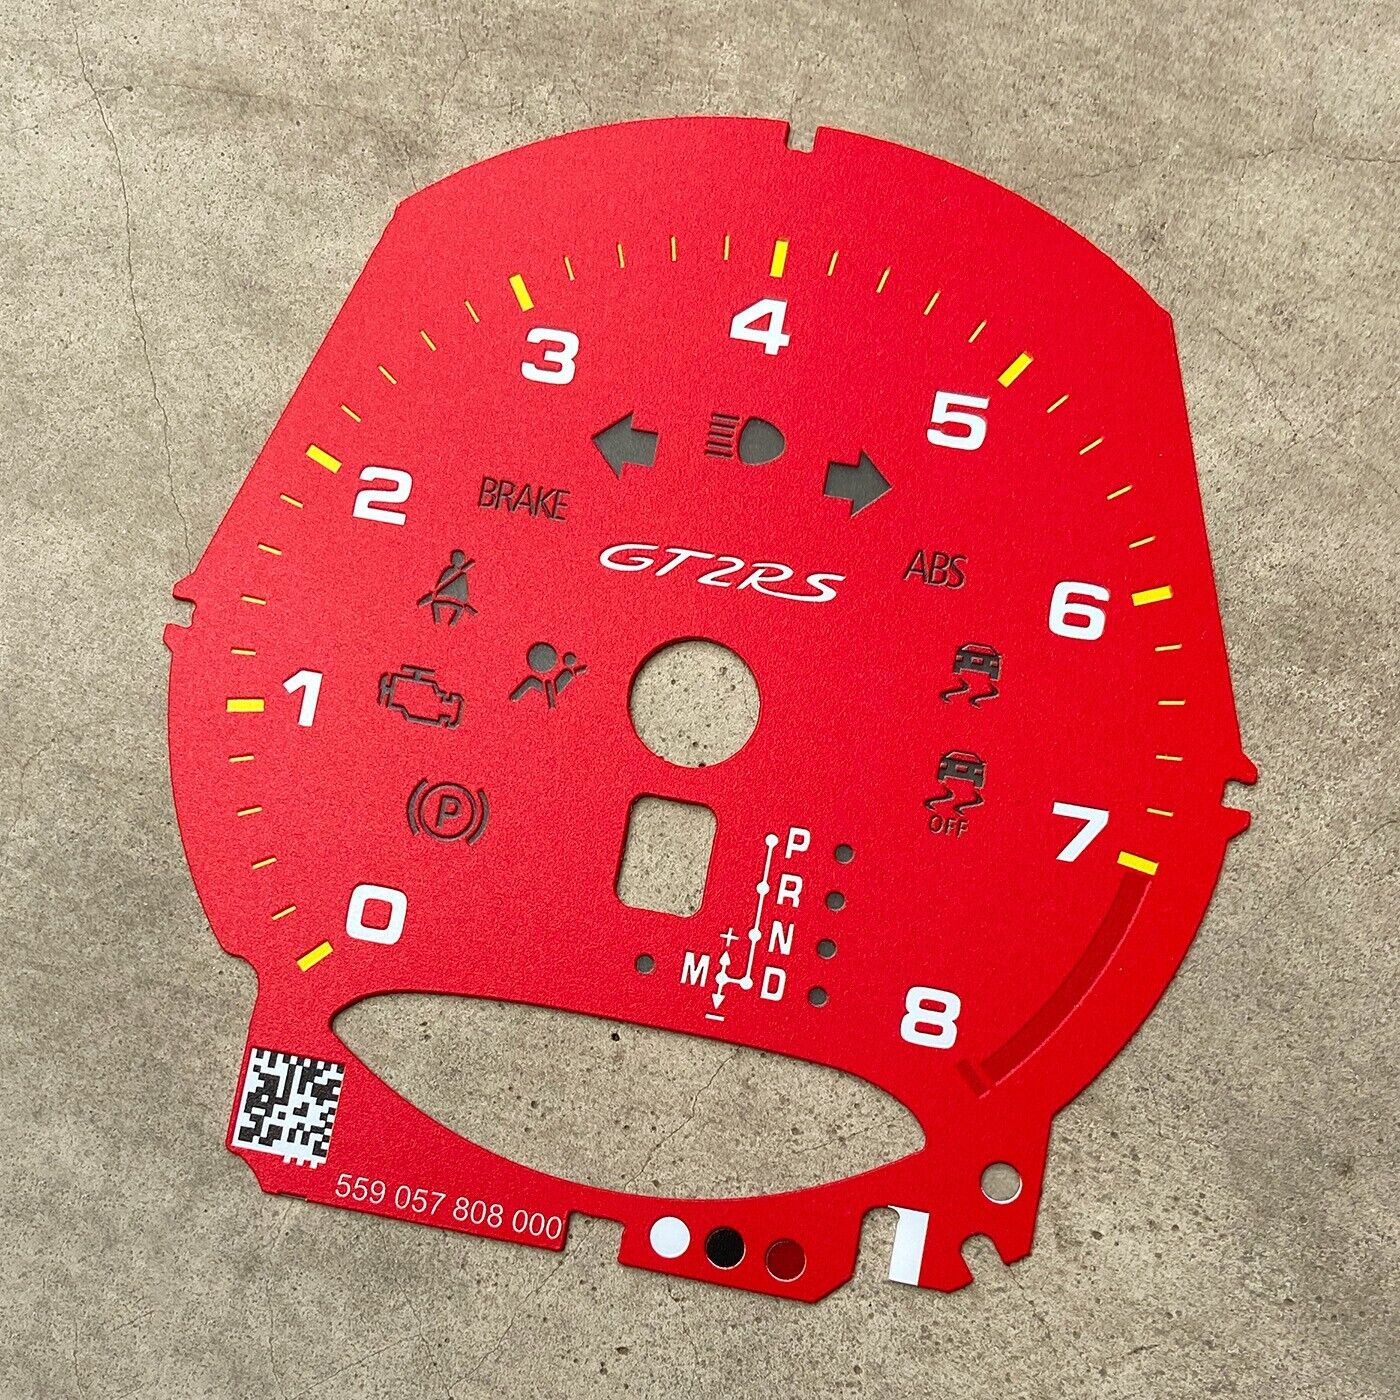 Porsche 911 991 GT2 RS Red Instrument Cluster Replacement Gauge Face Tachometer